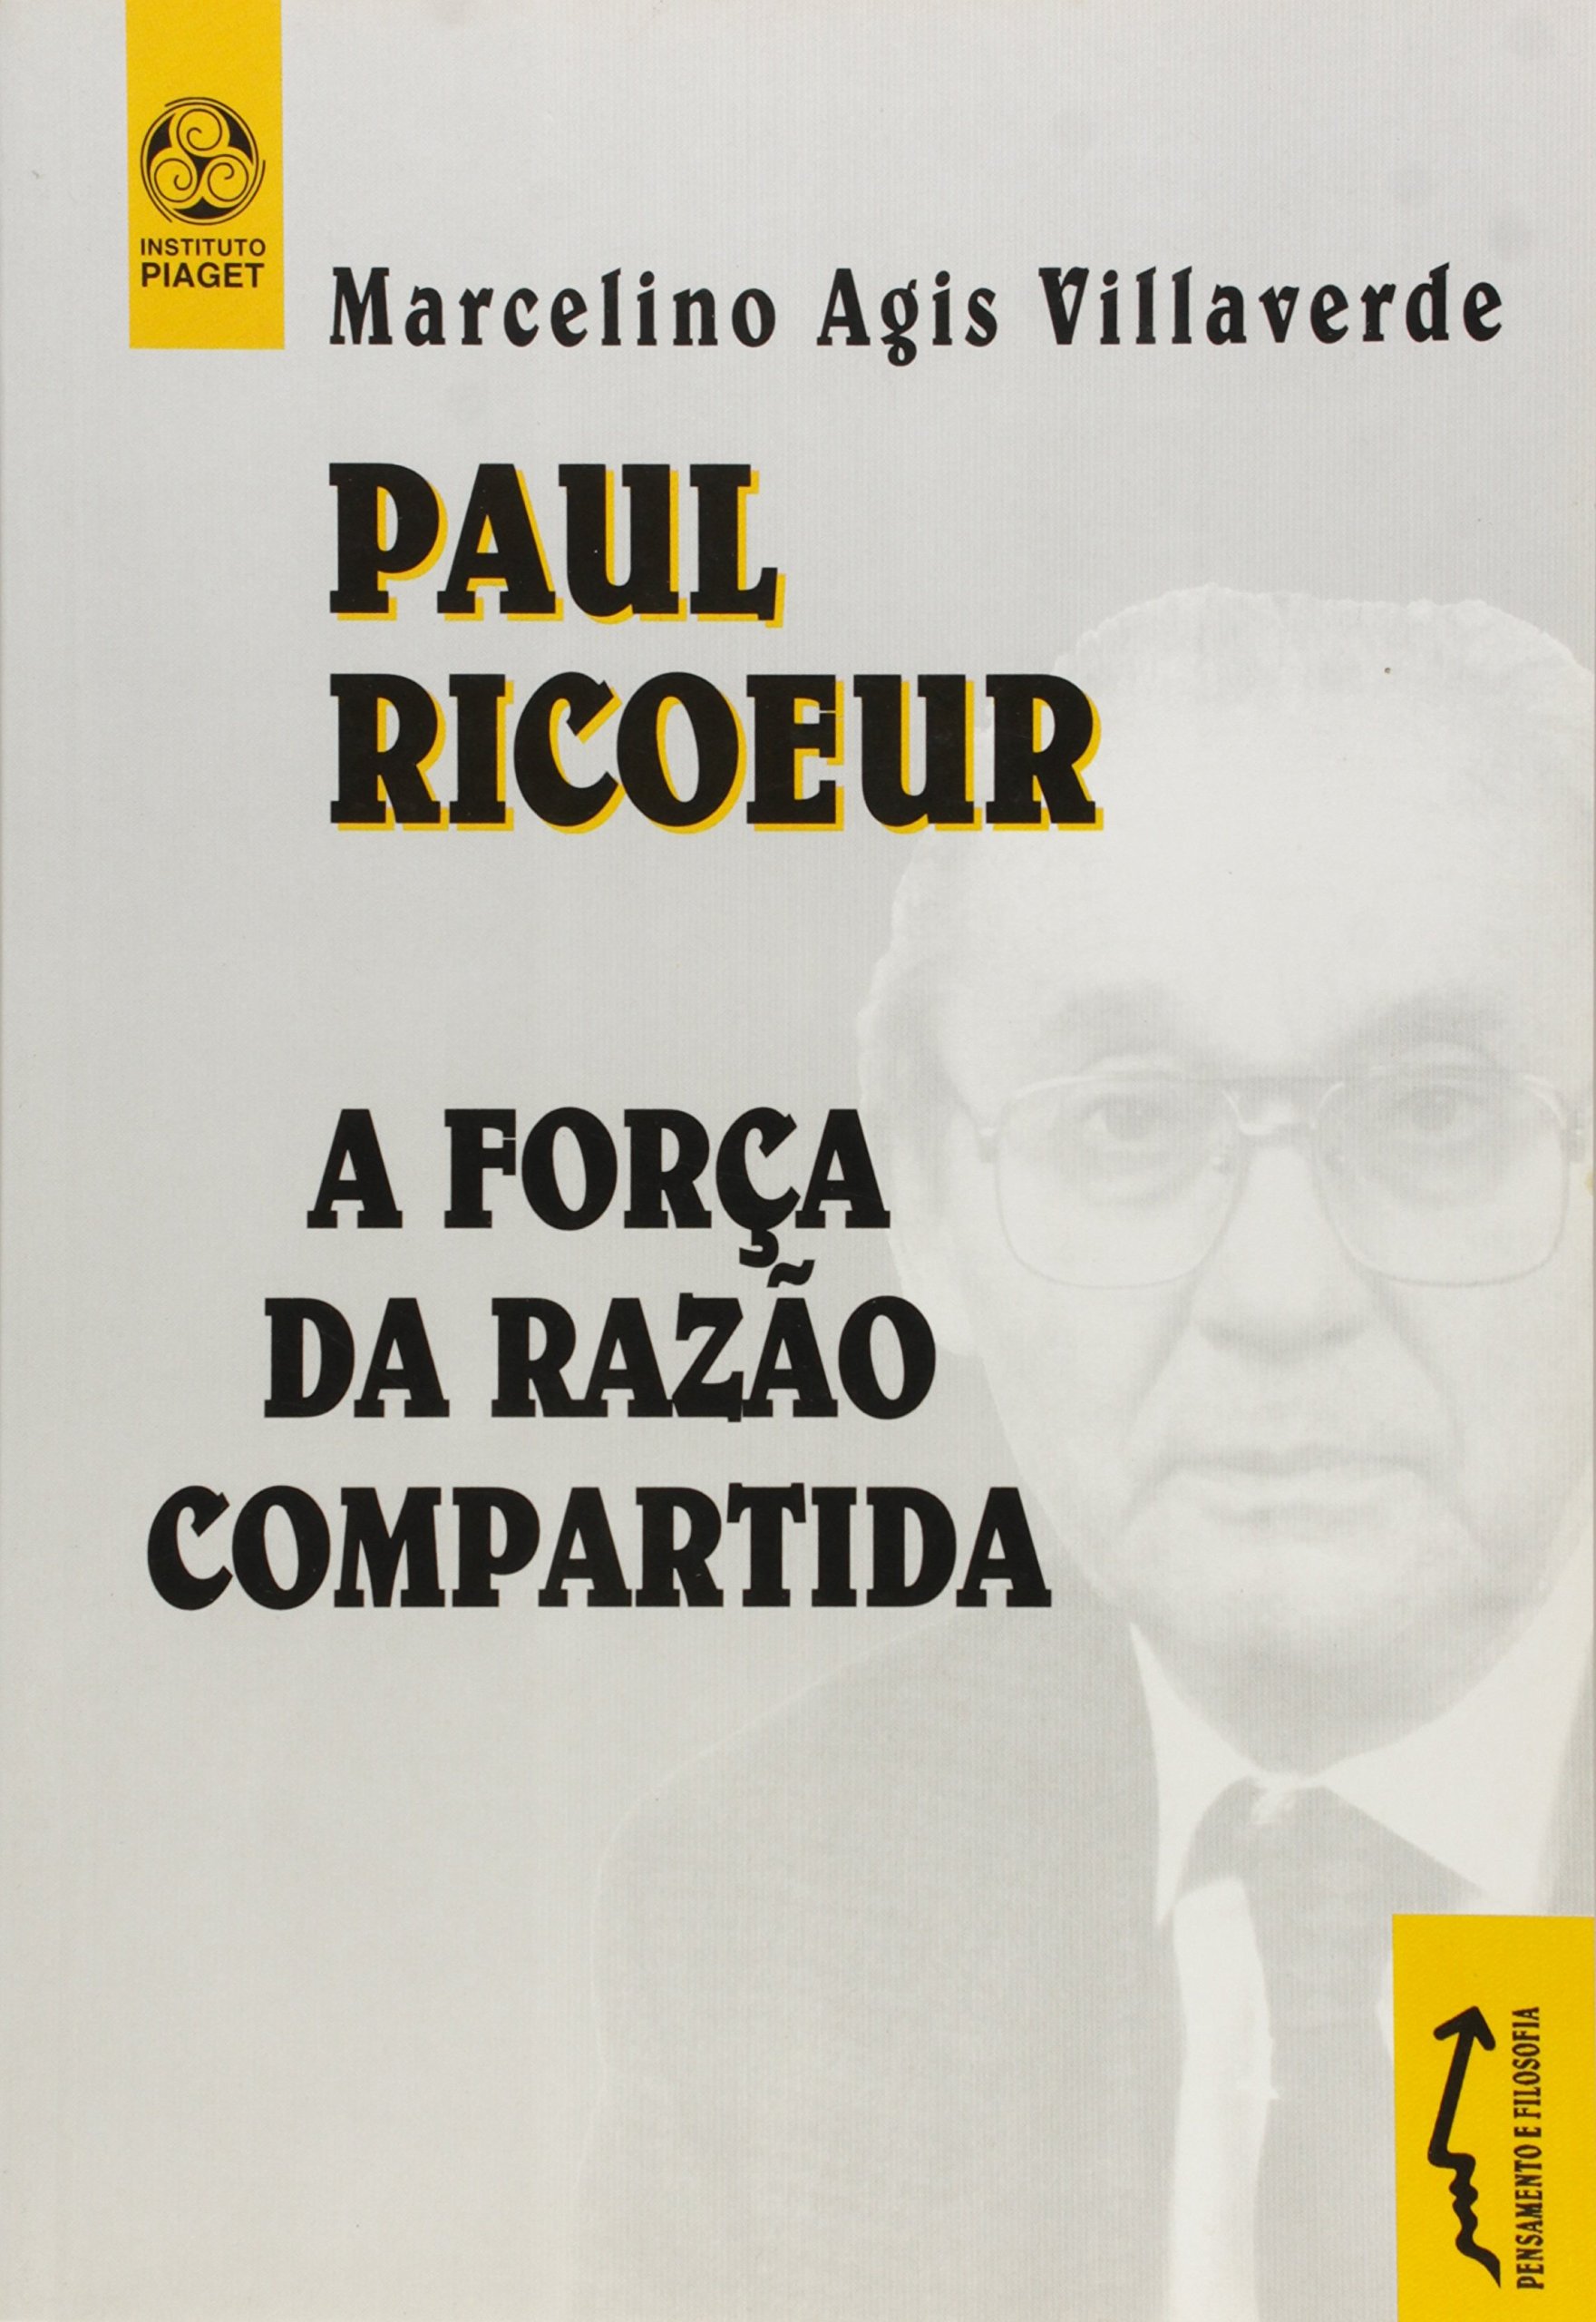 Imagen de portada del libro Paul Ricoeur, a força da razão compartida